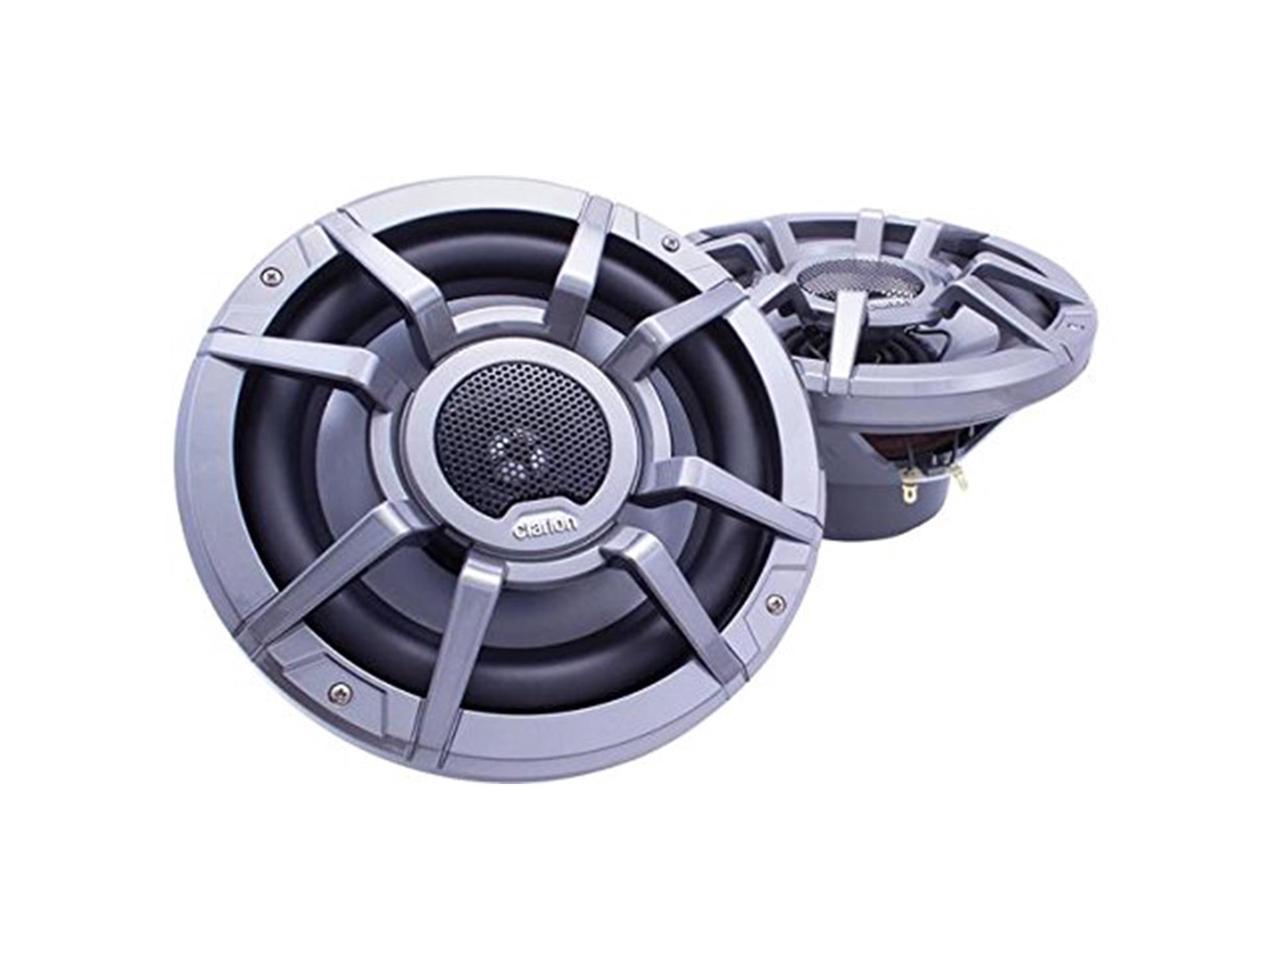 Clarion CM2223R 8.8" 2-Way Marine Speakers - Newegg.com